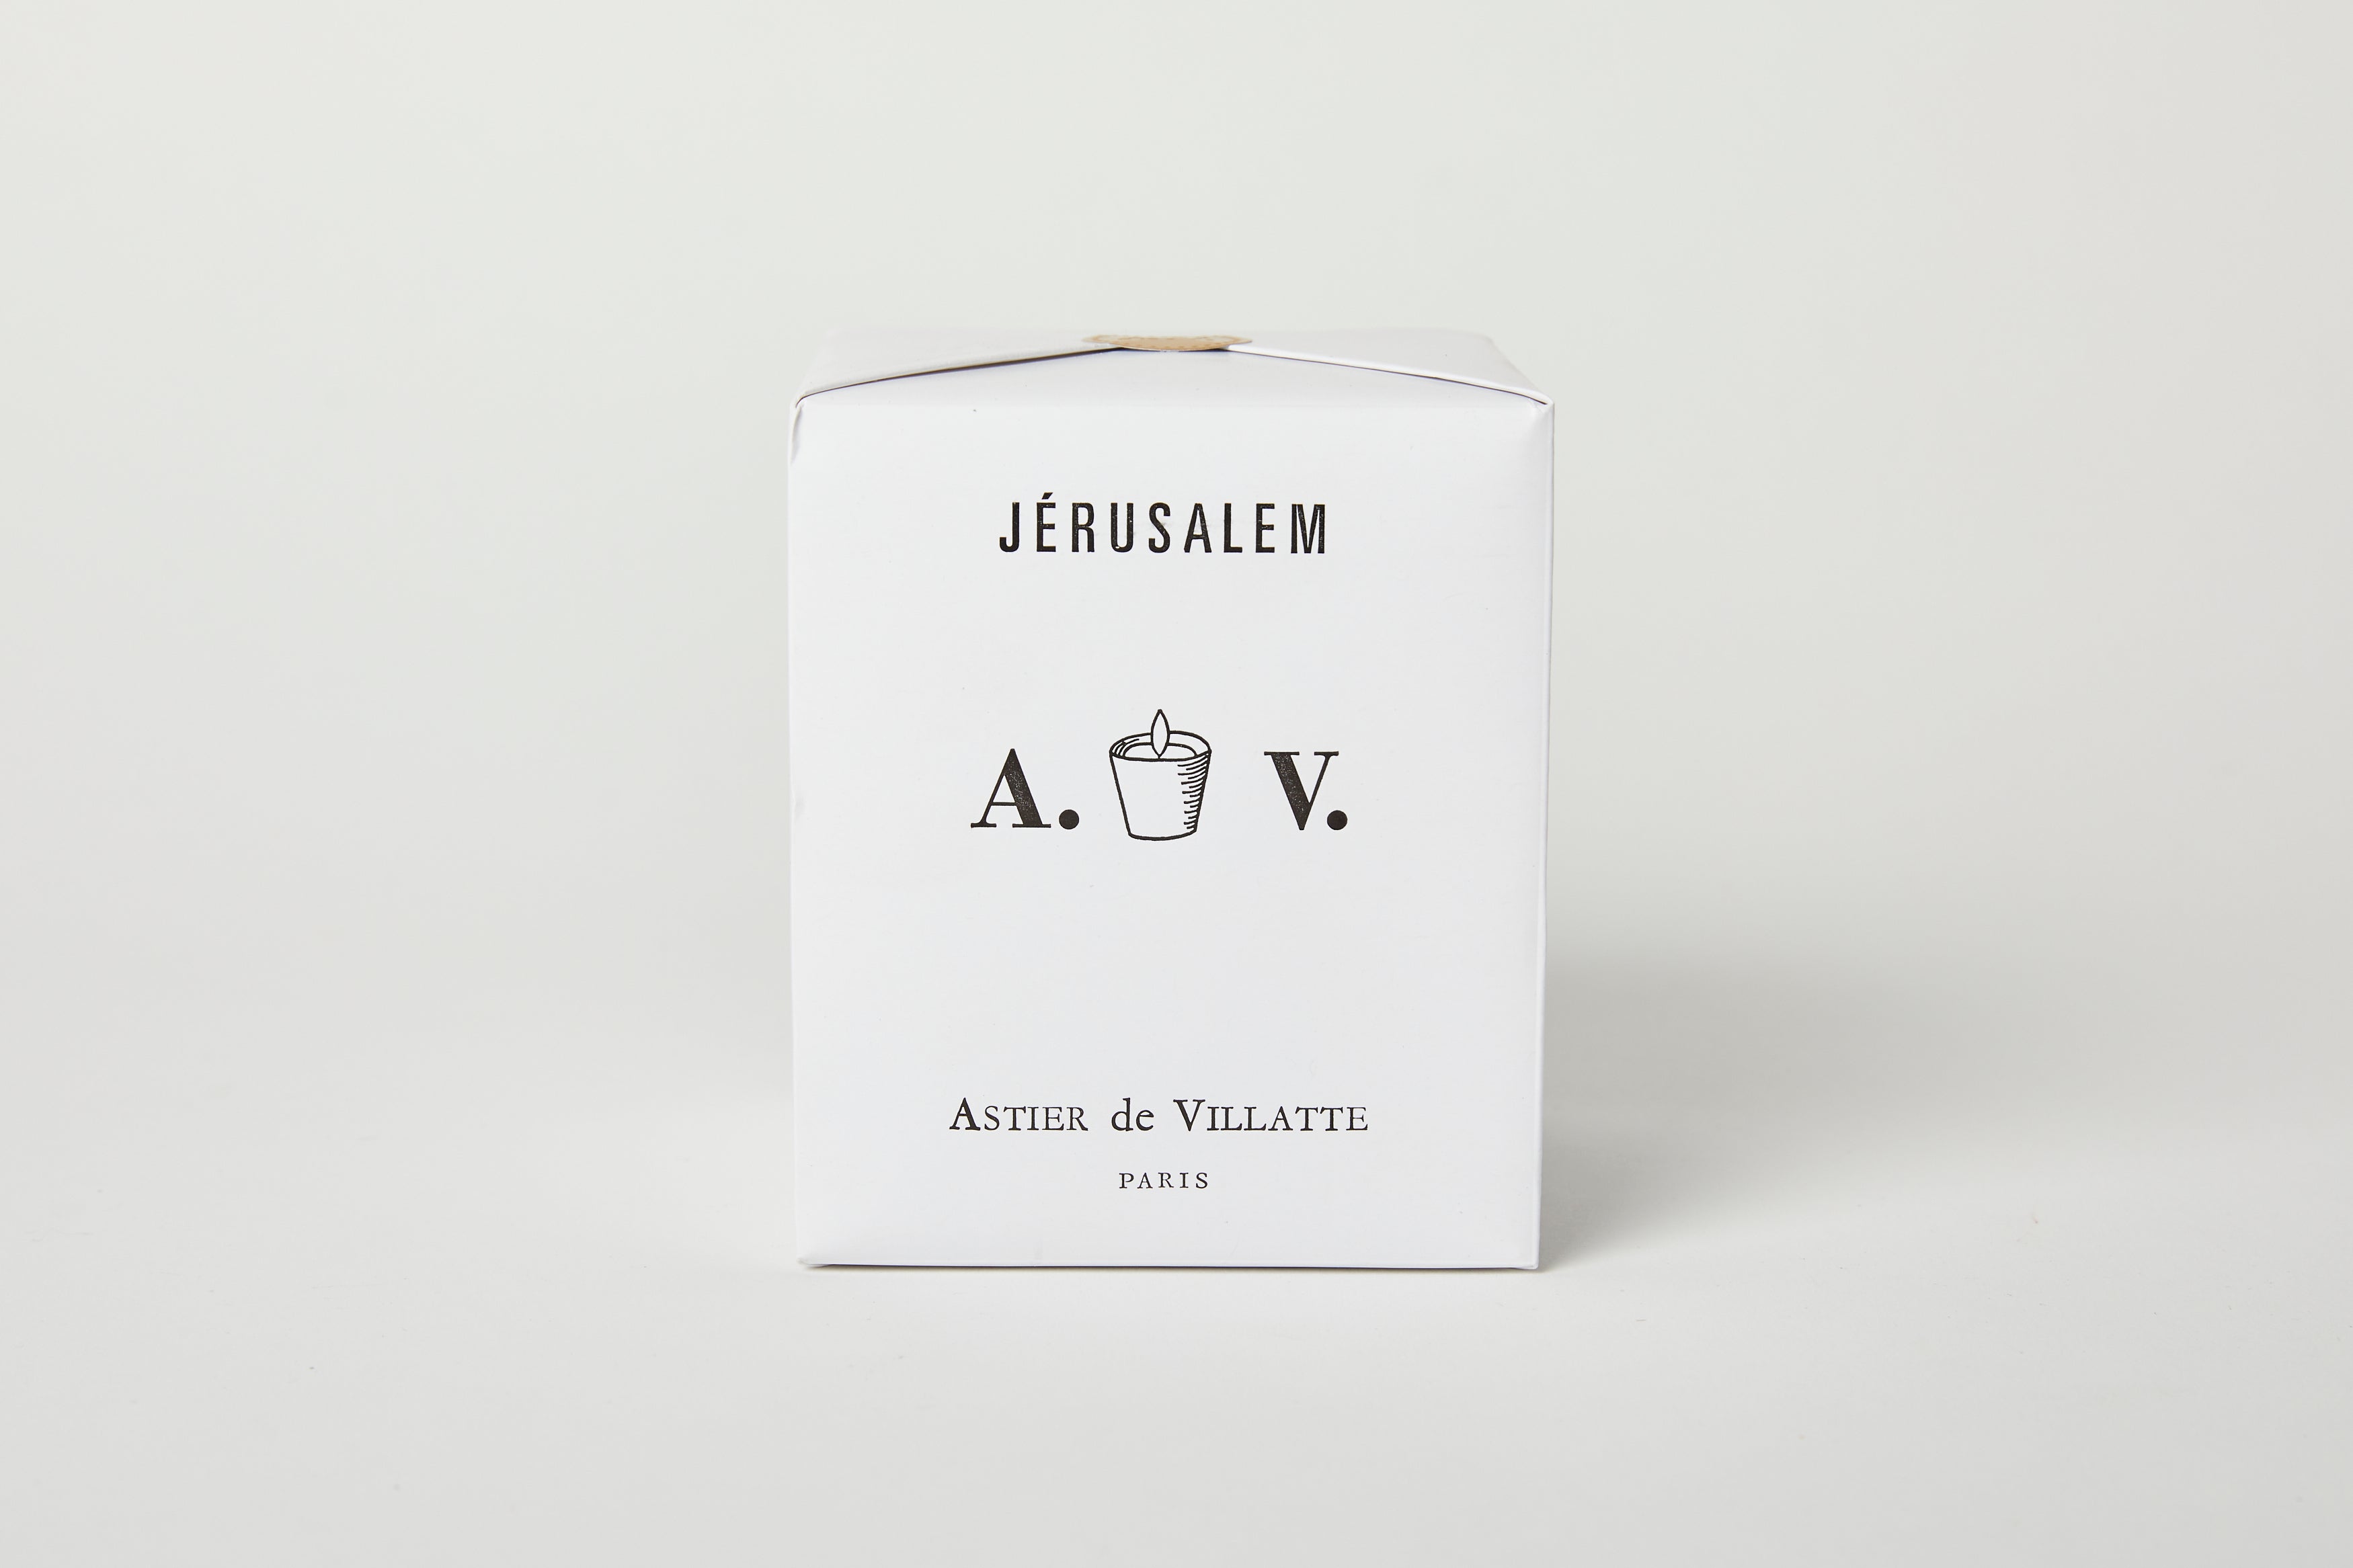 Jerusalem Candle